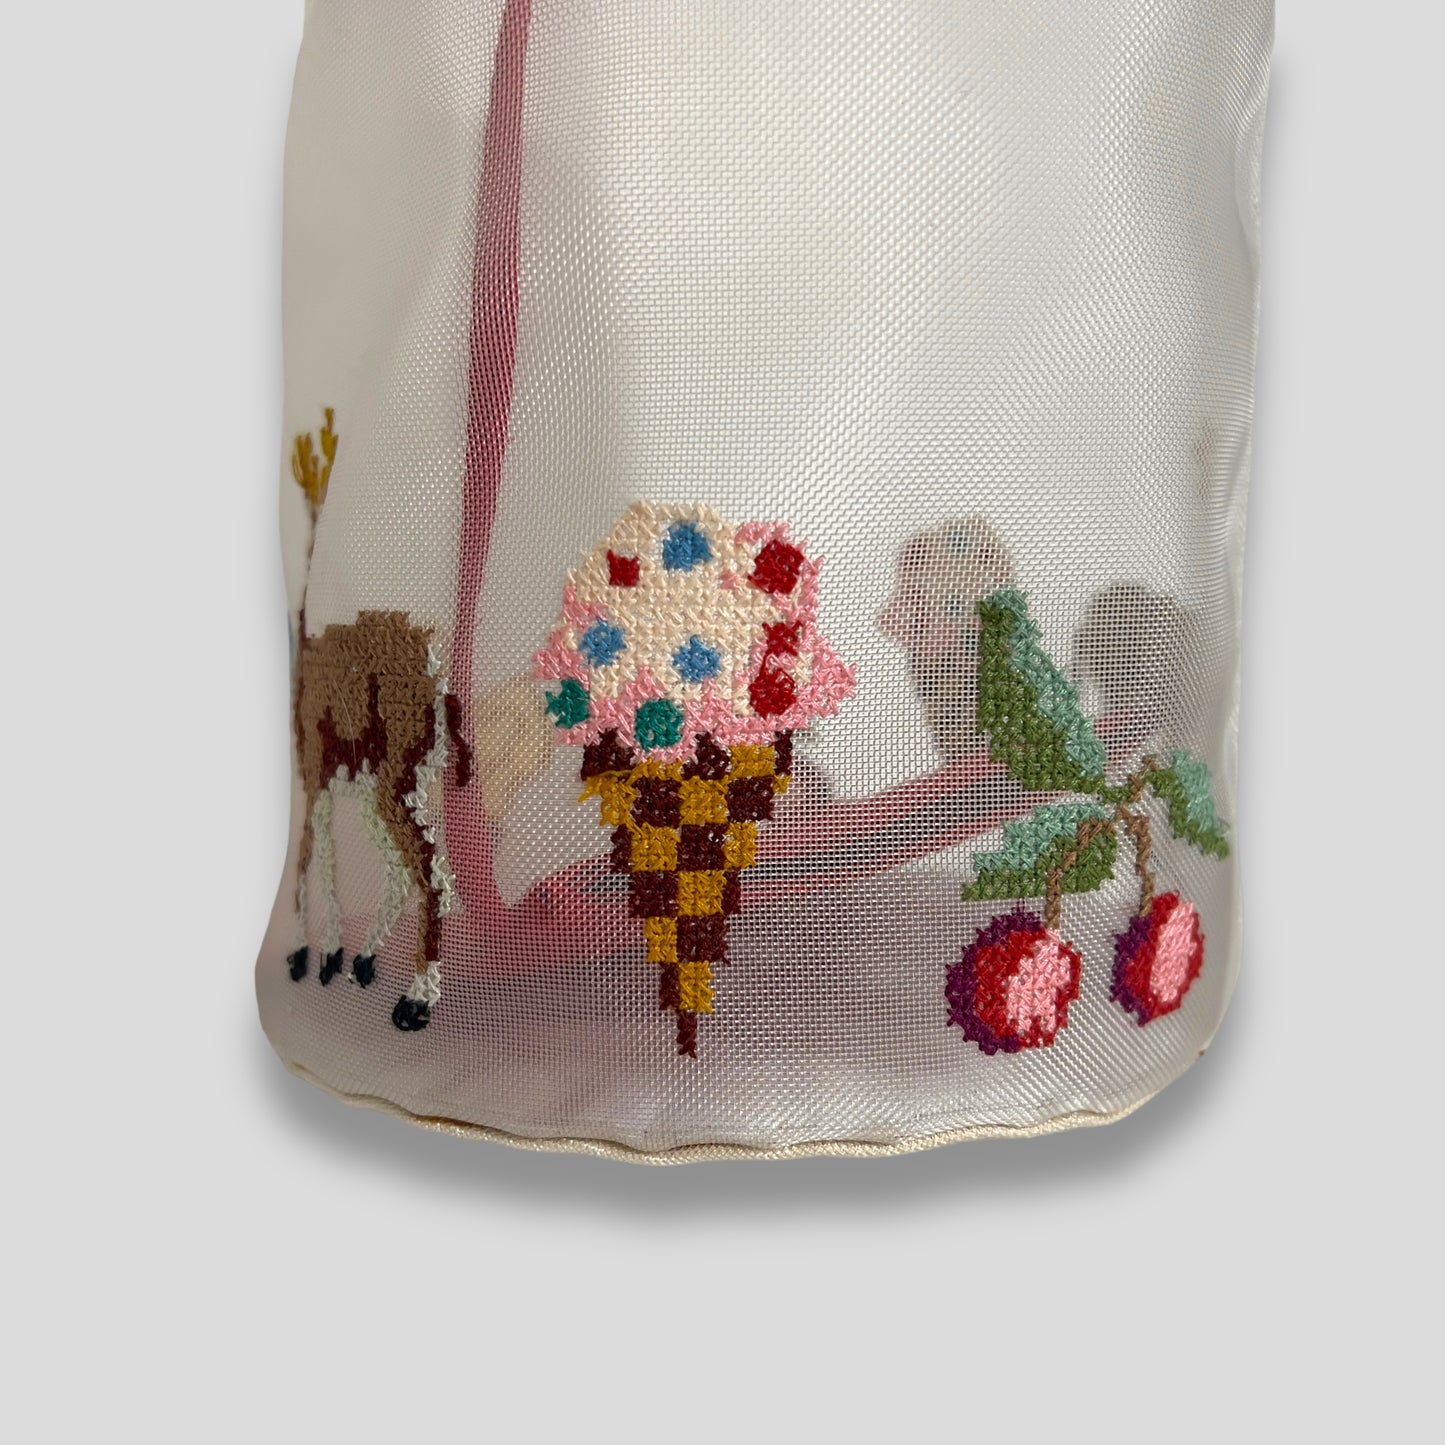 Miu Miu 1998 embroidery bag